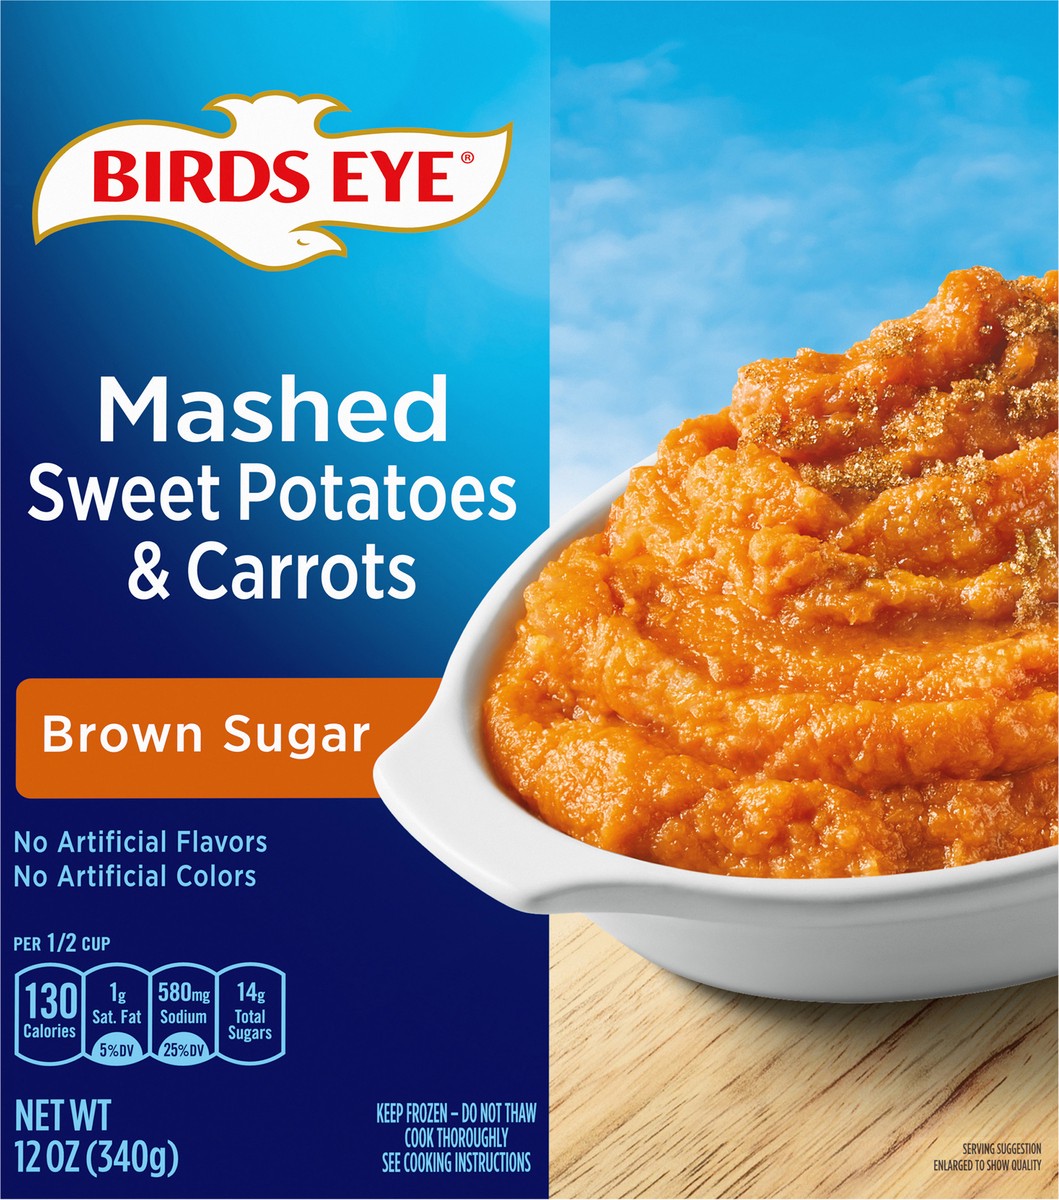 slide 9 of 11, Birds Eye Birds' Eye Mashed Sweet Potatoes & Carrots With Brown Sugar, 12 oz